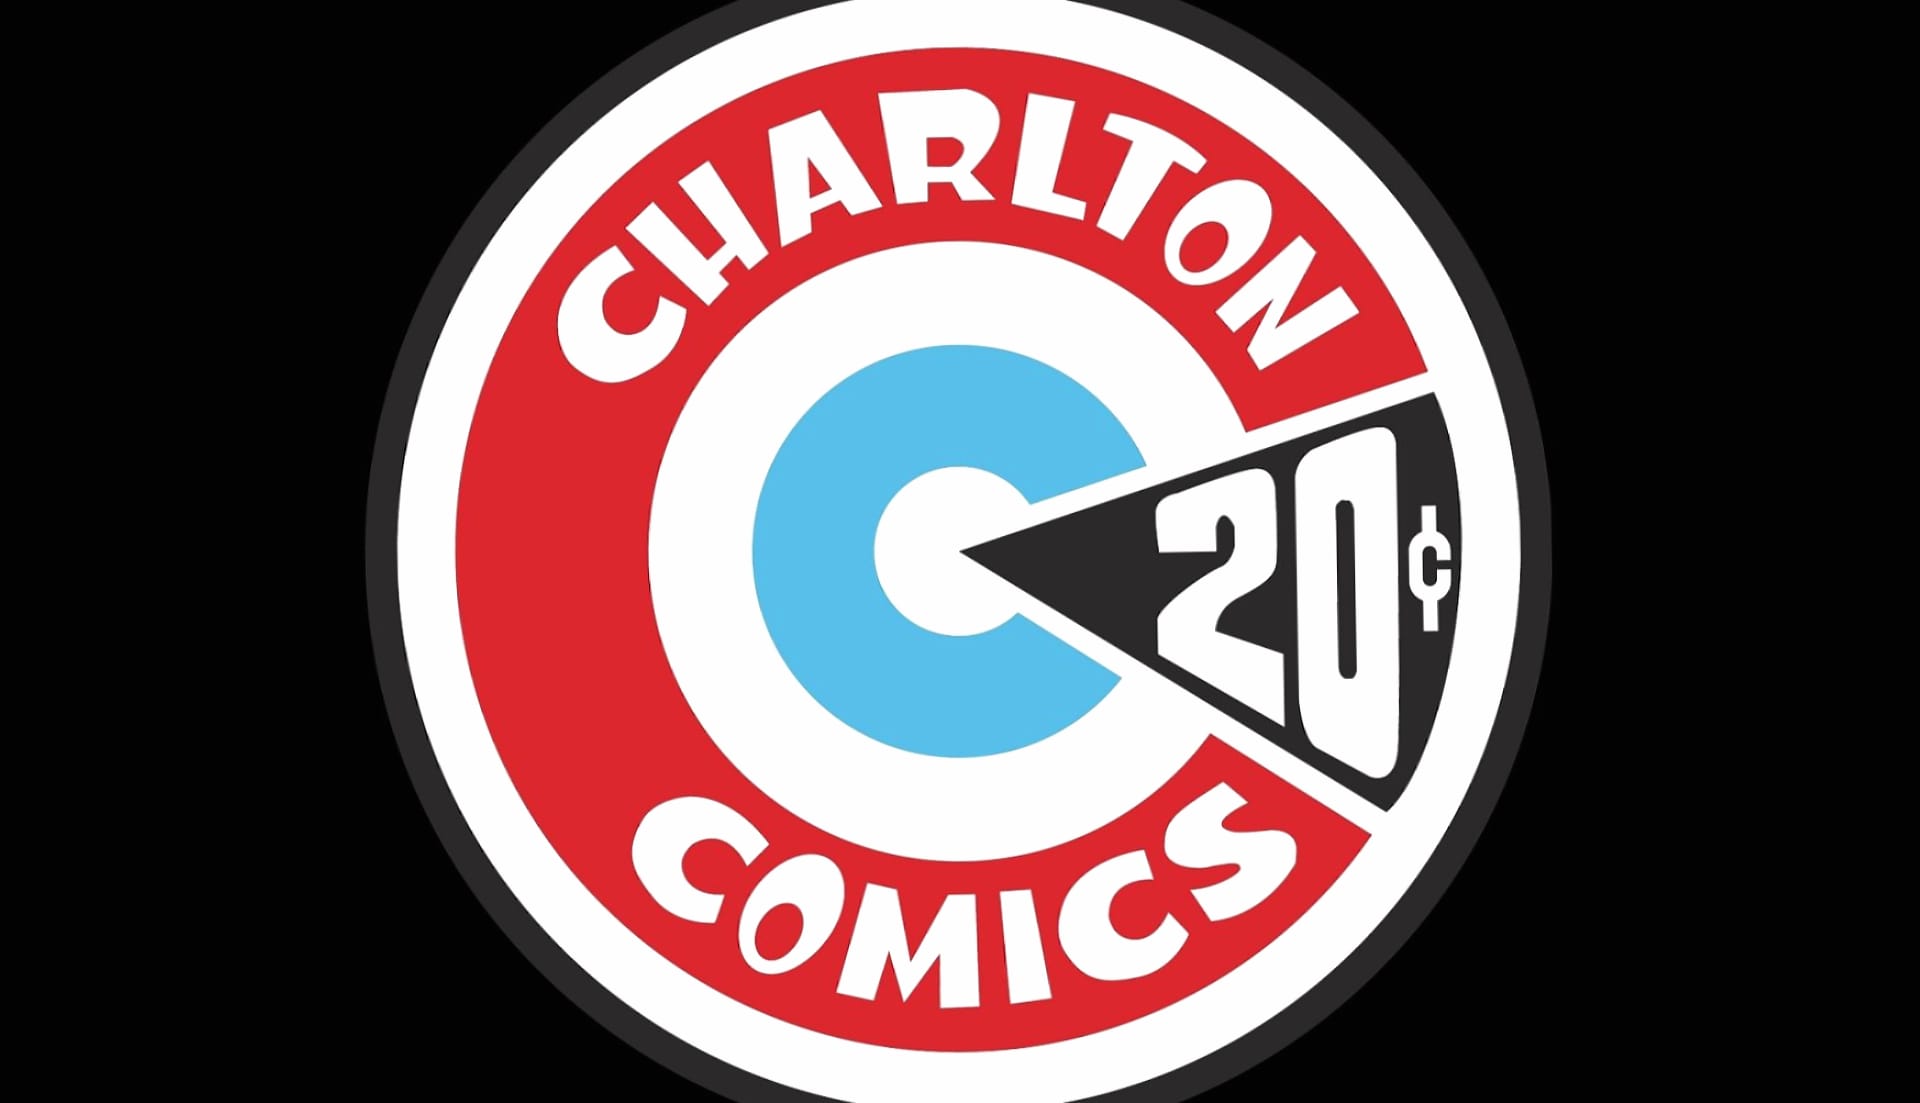 charlton Comics at 1152 x 864 size wallpapers HD quality